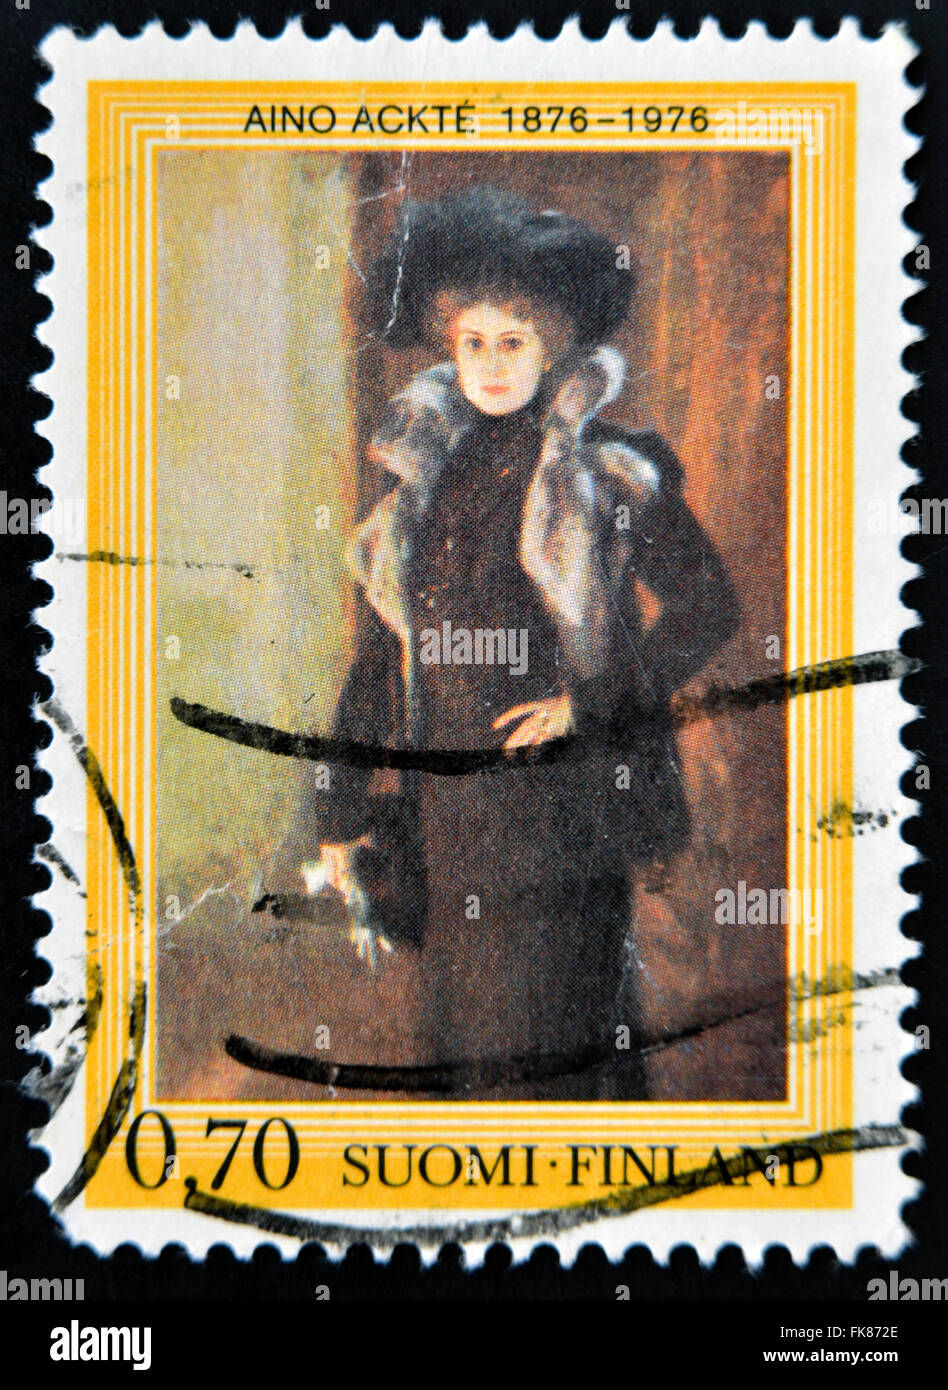 FINLAND - CIRCA 1979: A stamp printed in Finland shows Aino Ackte, circa 1979 Stock Photo